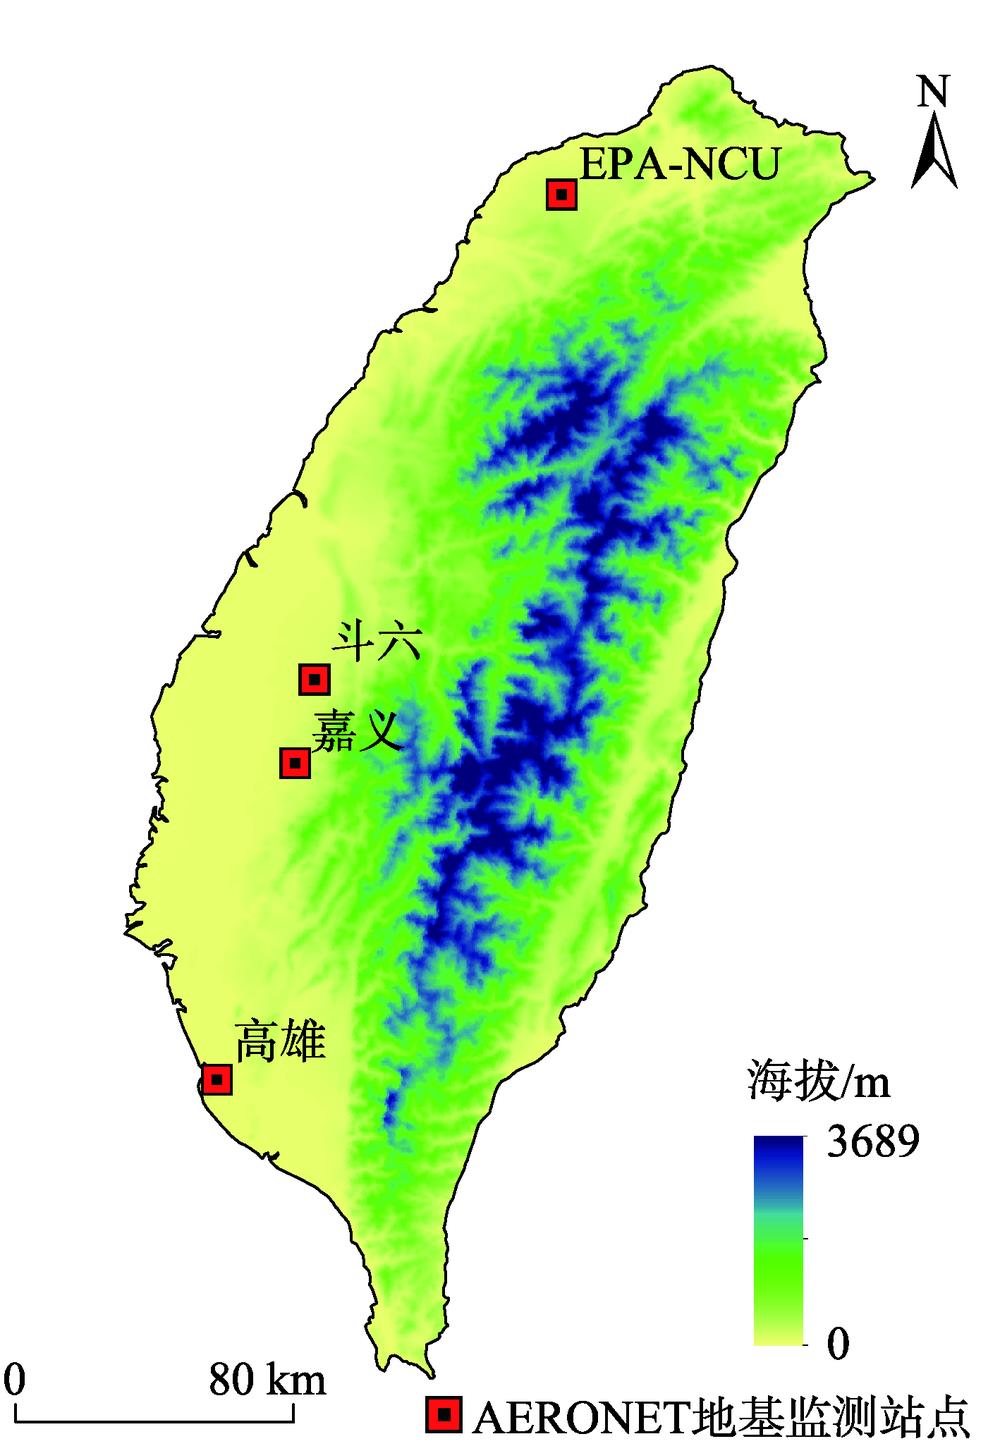 AERONET Sites distribution and altitude of Taiwan island